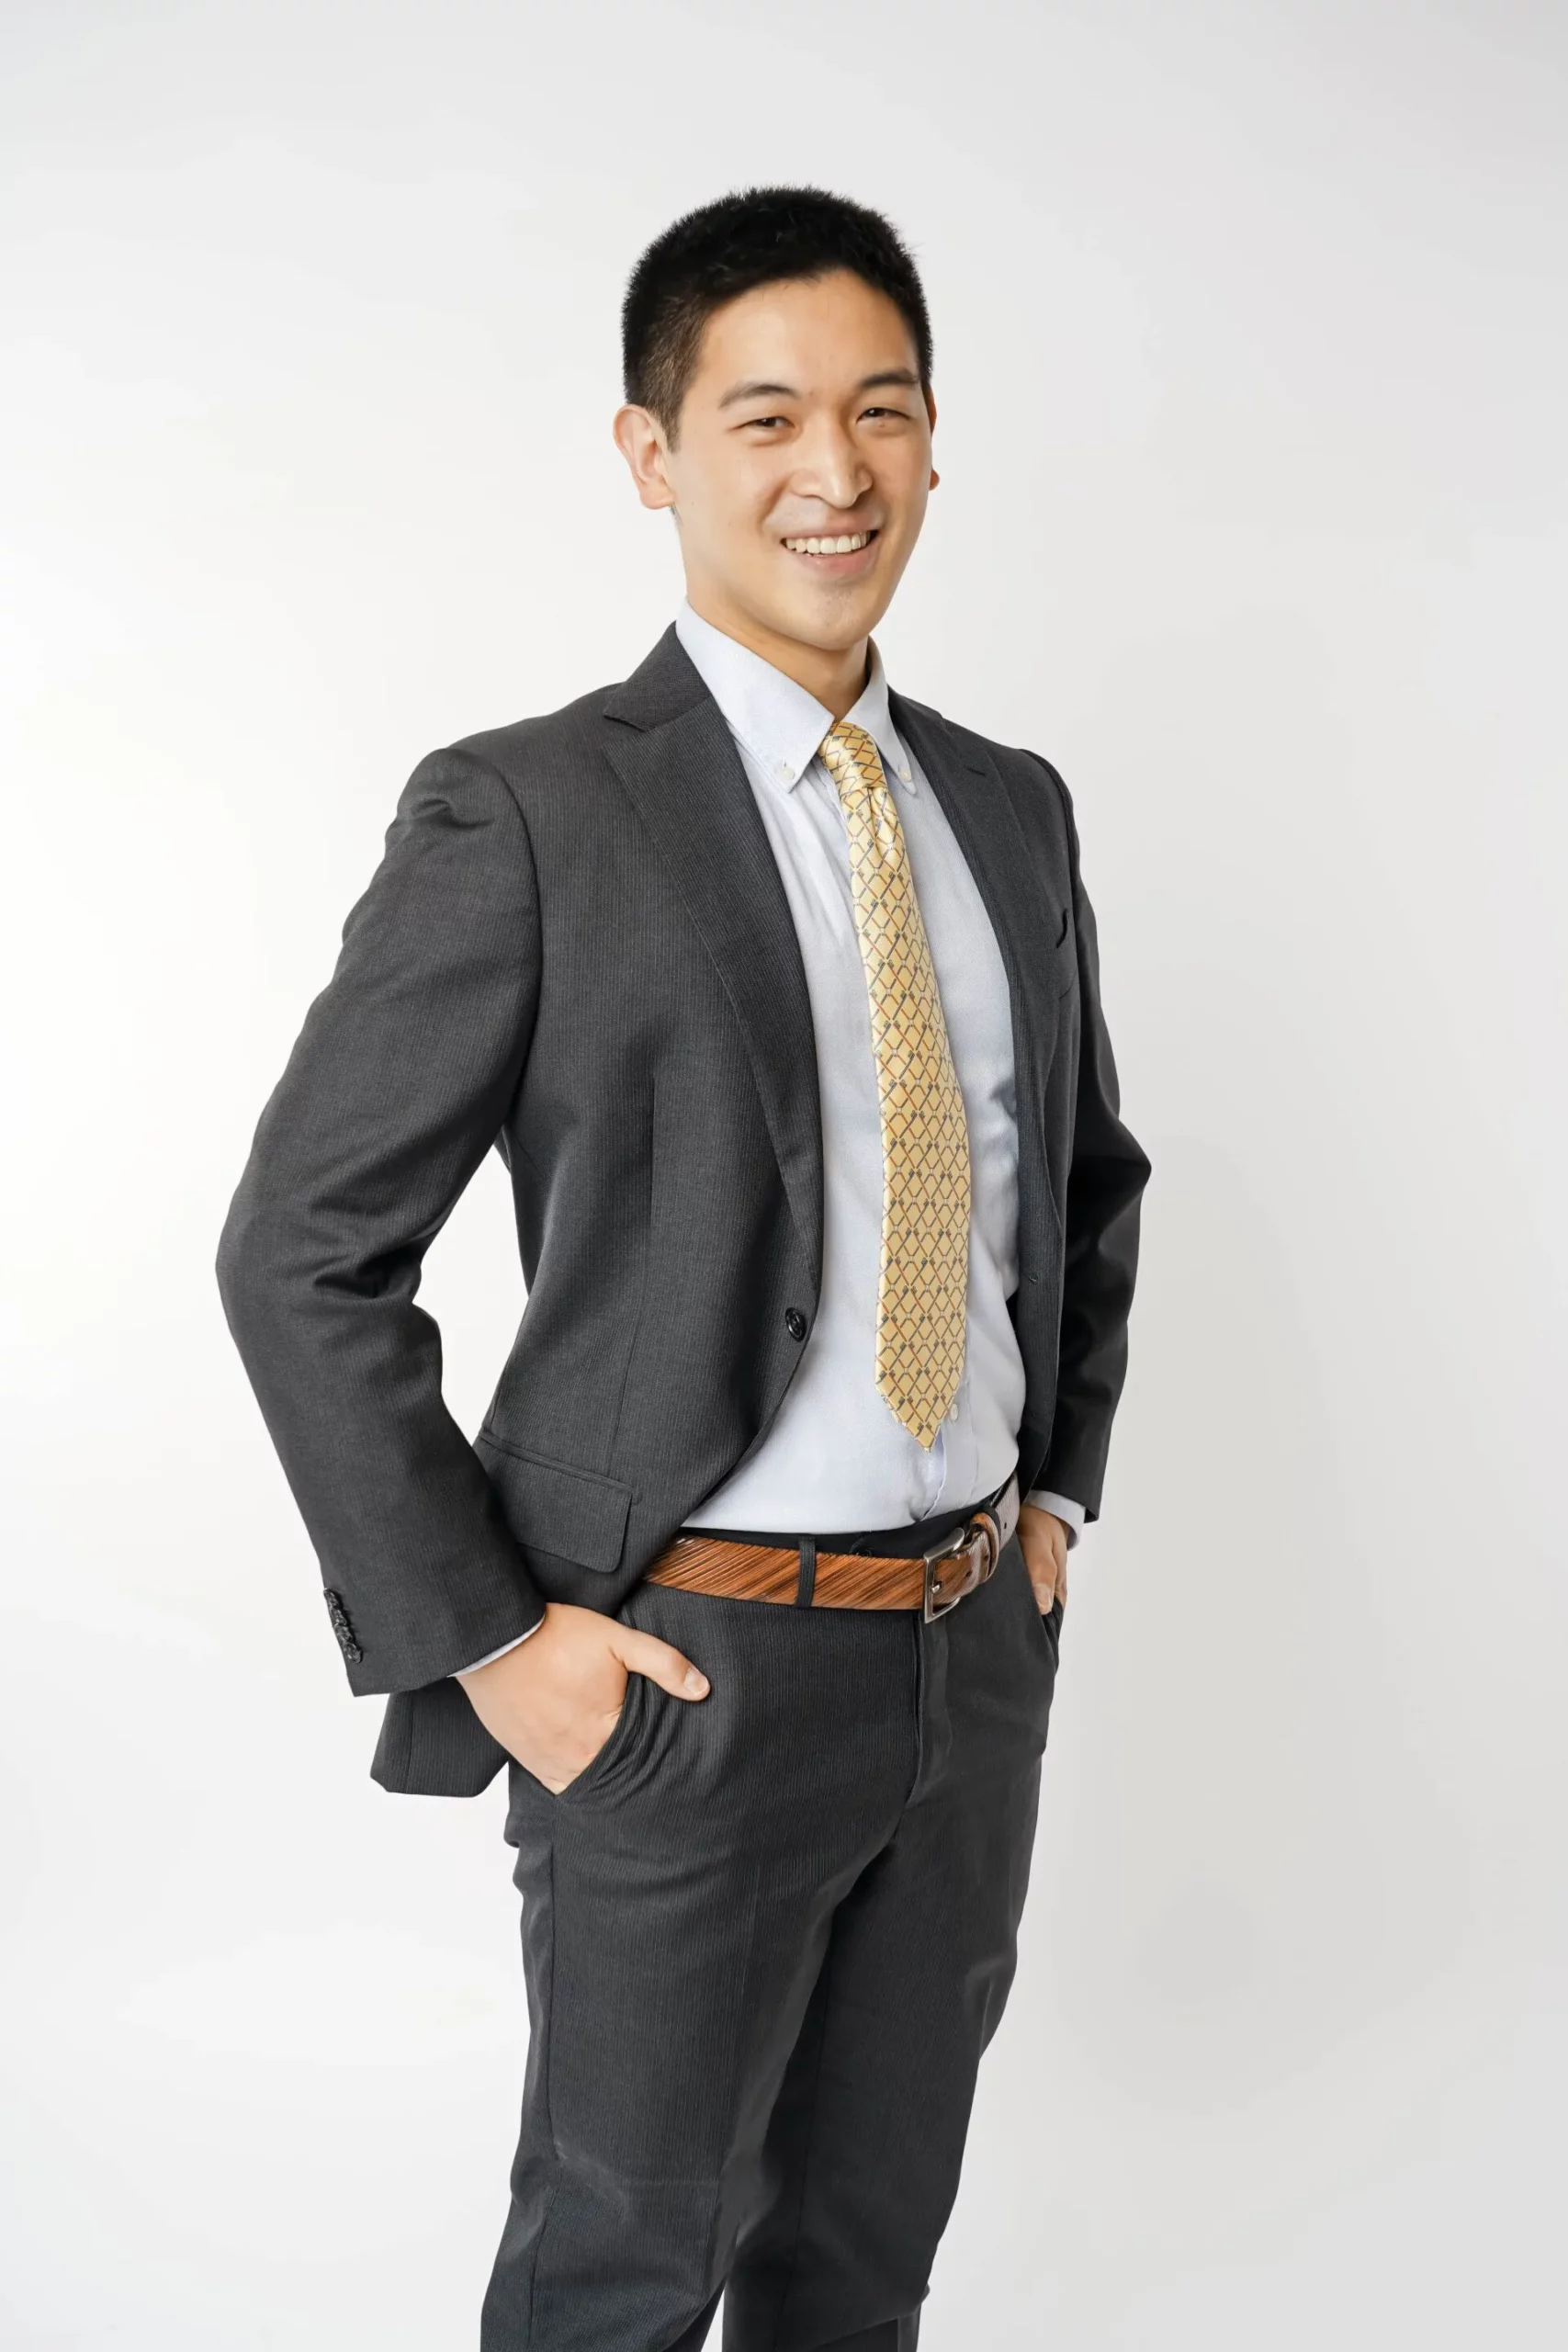 Dr. Michael Hsu